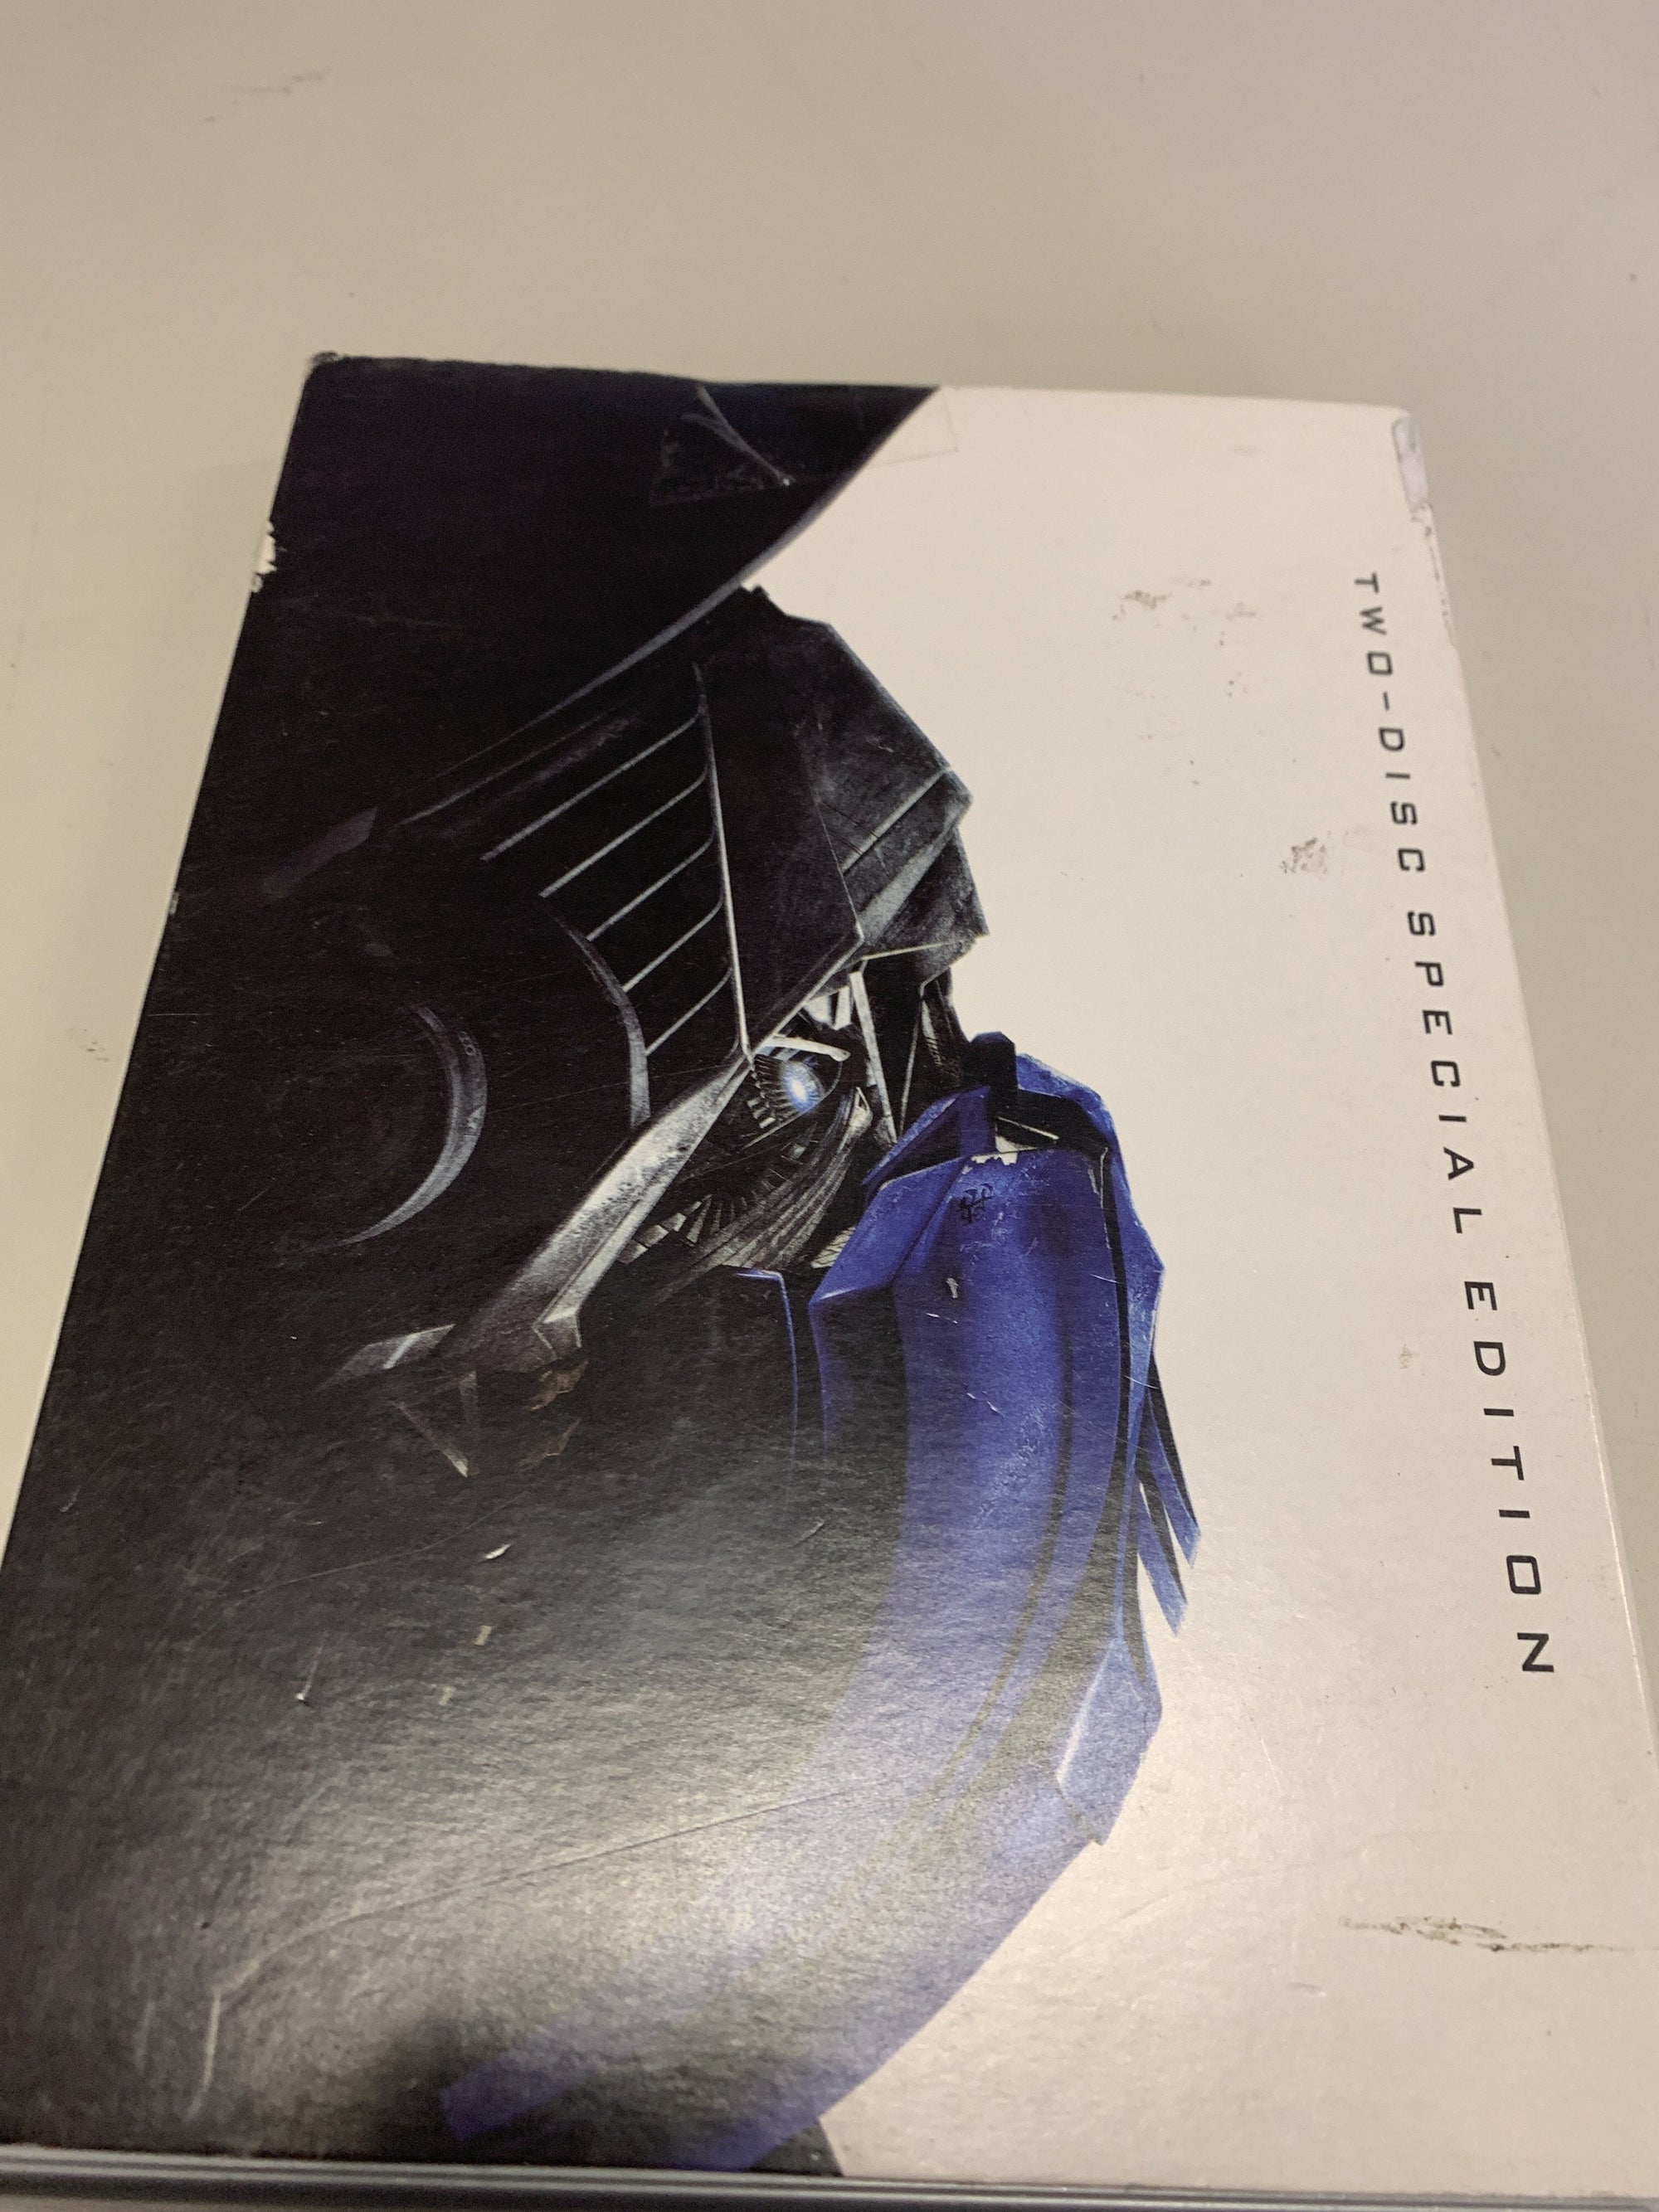 Transformers: 2 Disc Special Edition (DVD) - 2ndhandwarehouse.com